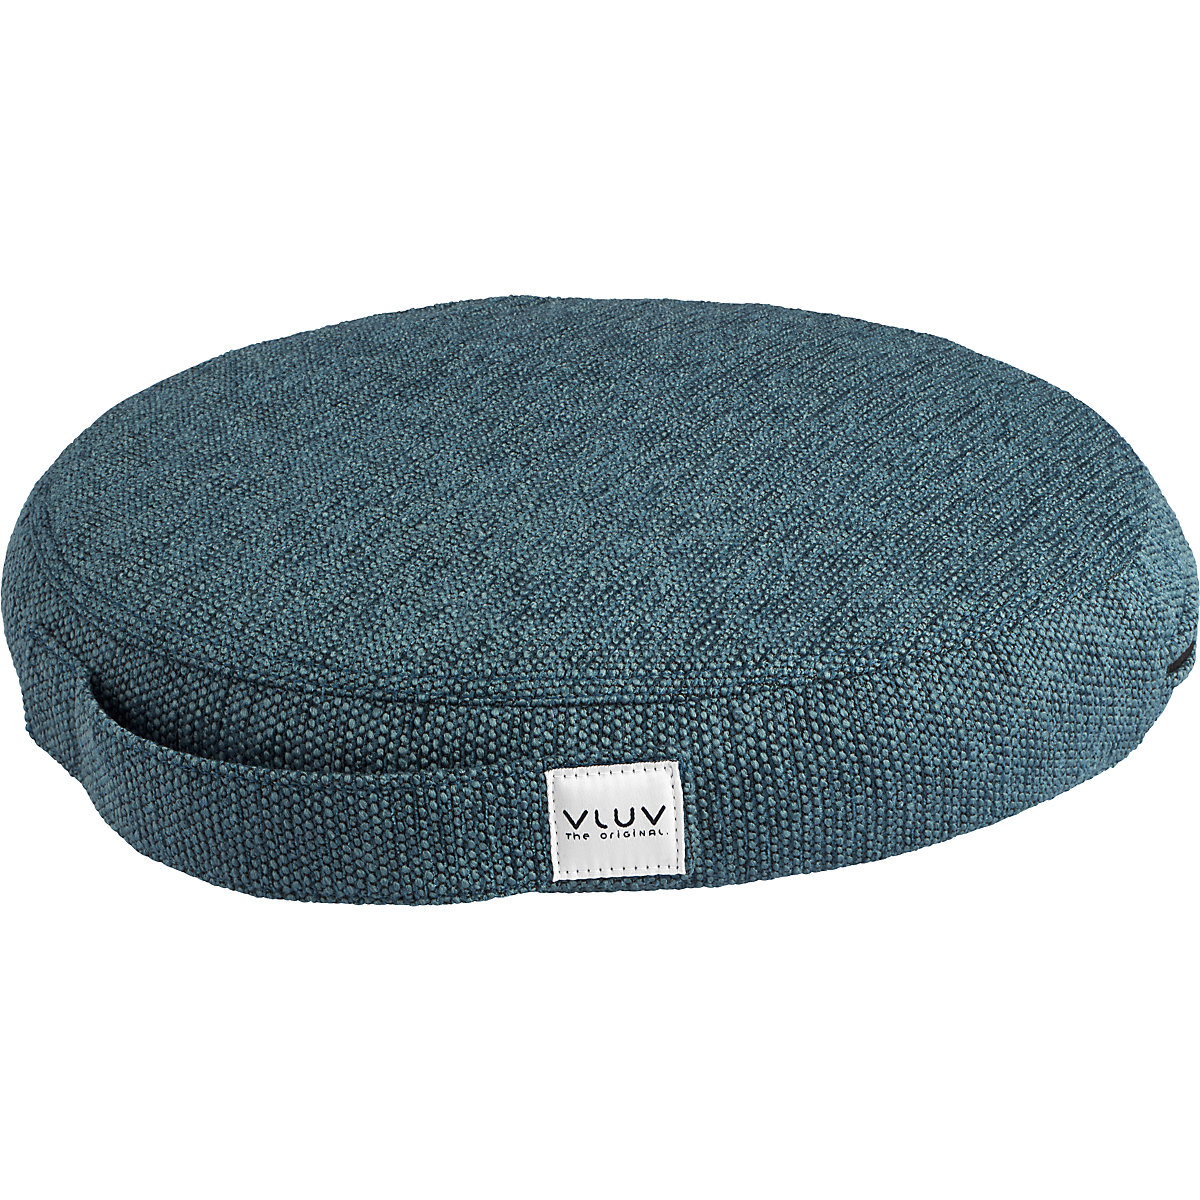 Jastuk za ravnotežu PIL&PED STOV – VLUV, s tekstilnom presvlakom, Ø 360 mm, u boji petroleja-12